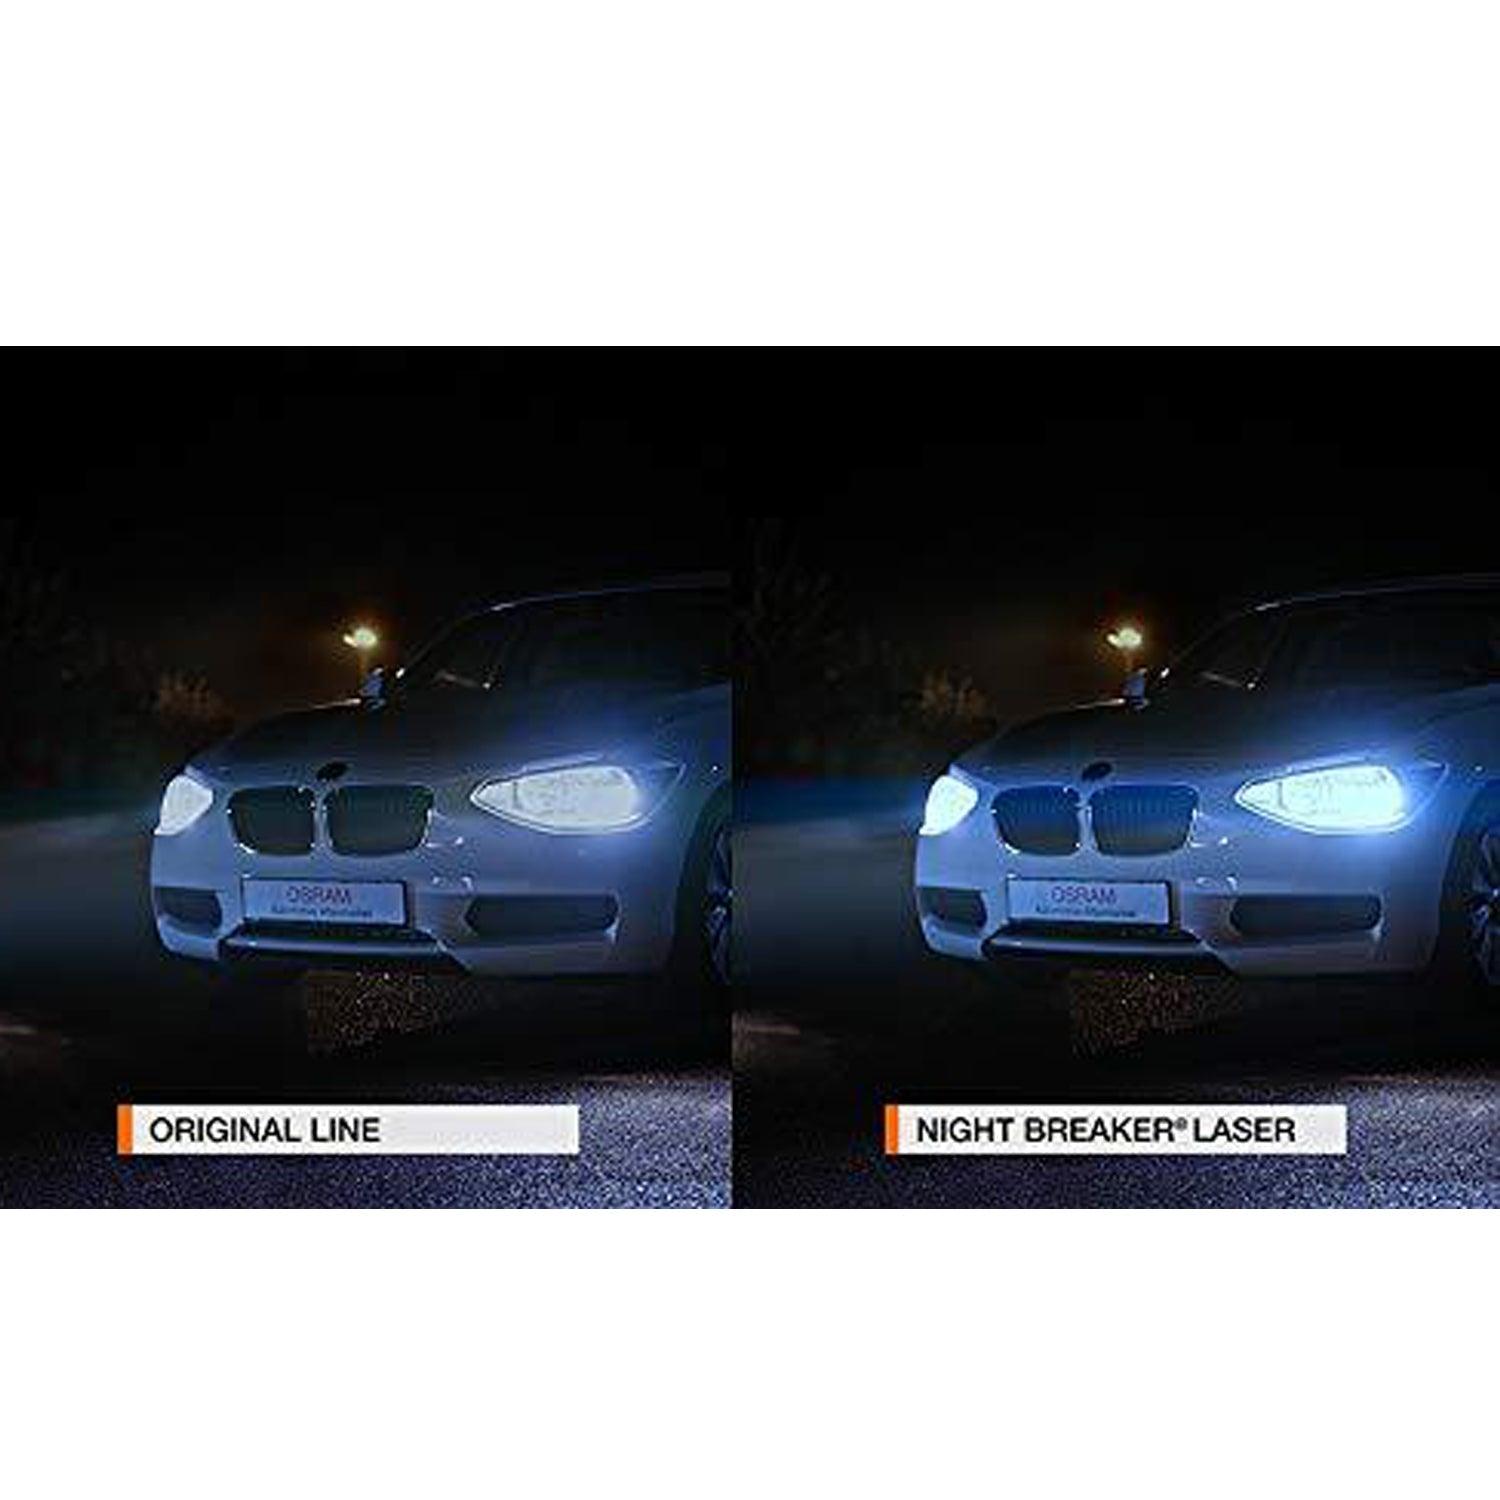 Osram Night Breaker Laser H1 : : Automotive